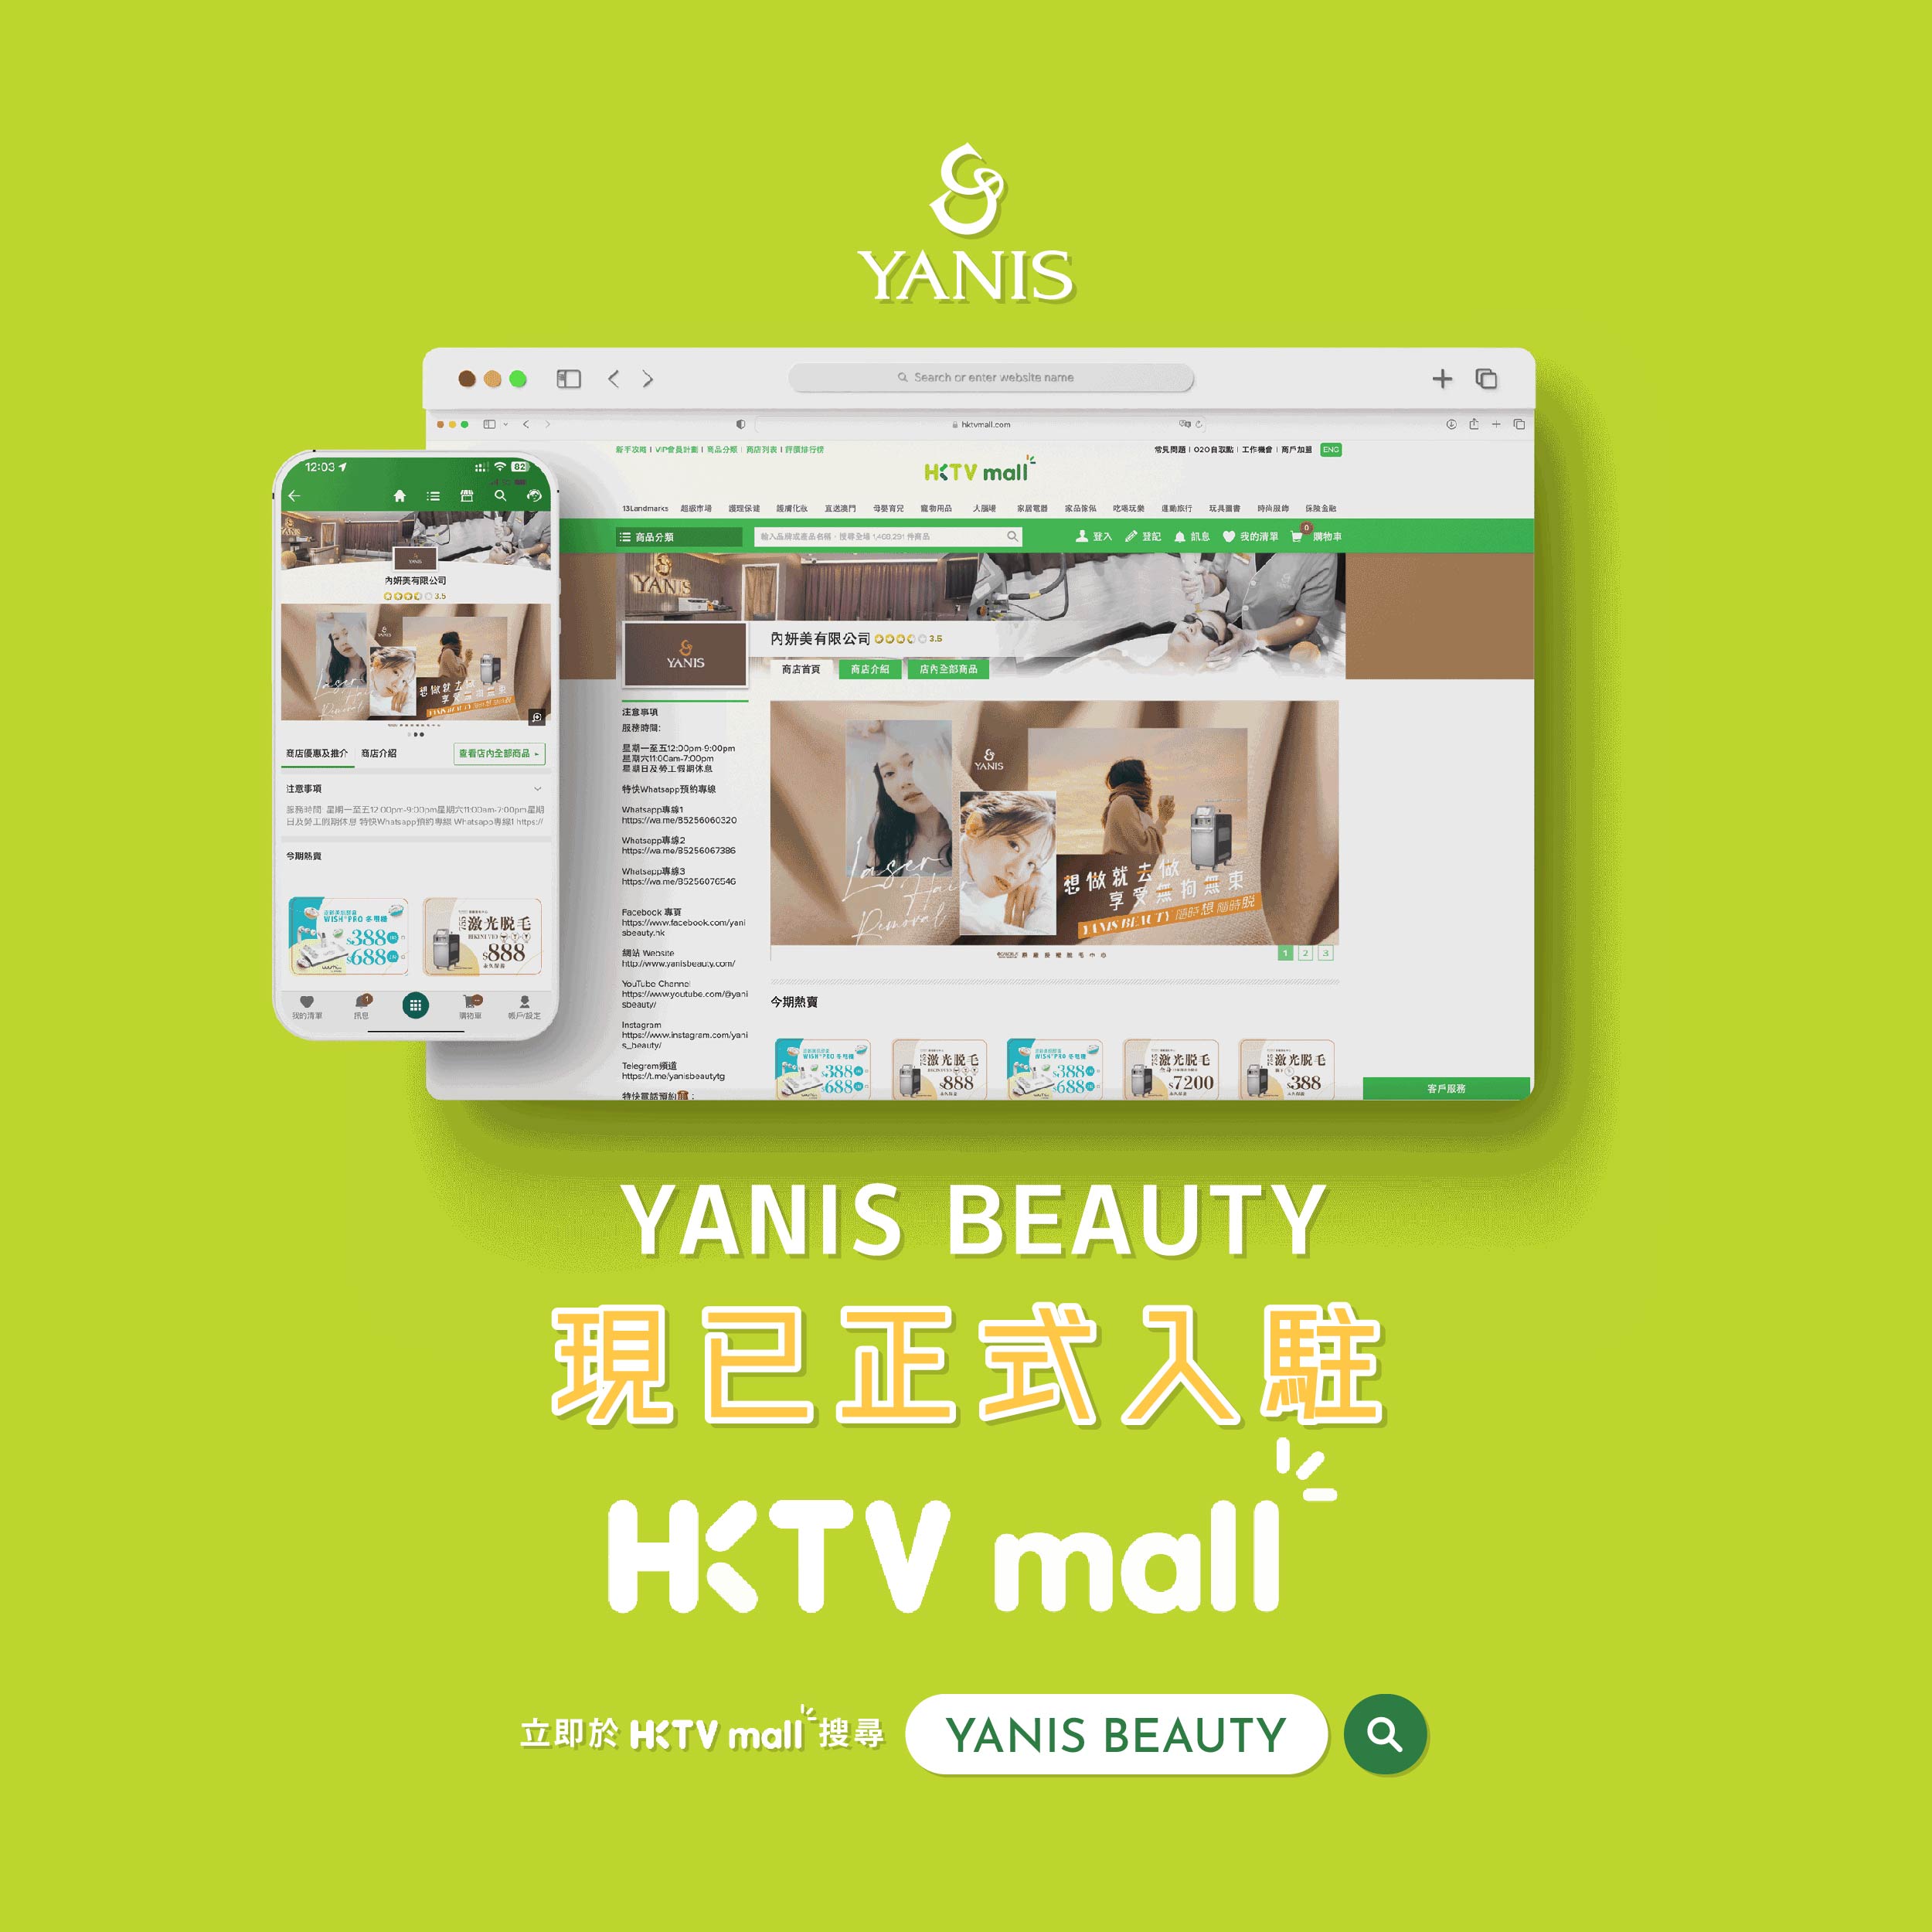 Yanis 已登陸 HKTVMALL